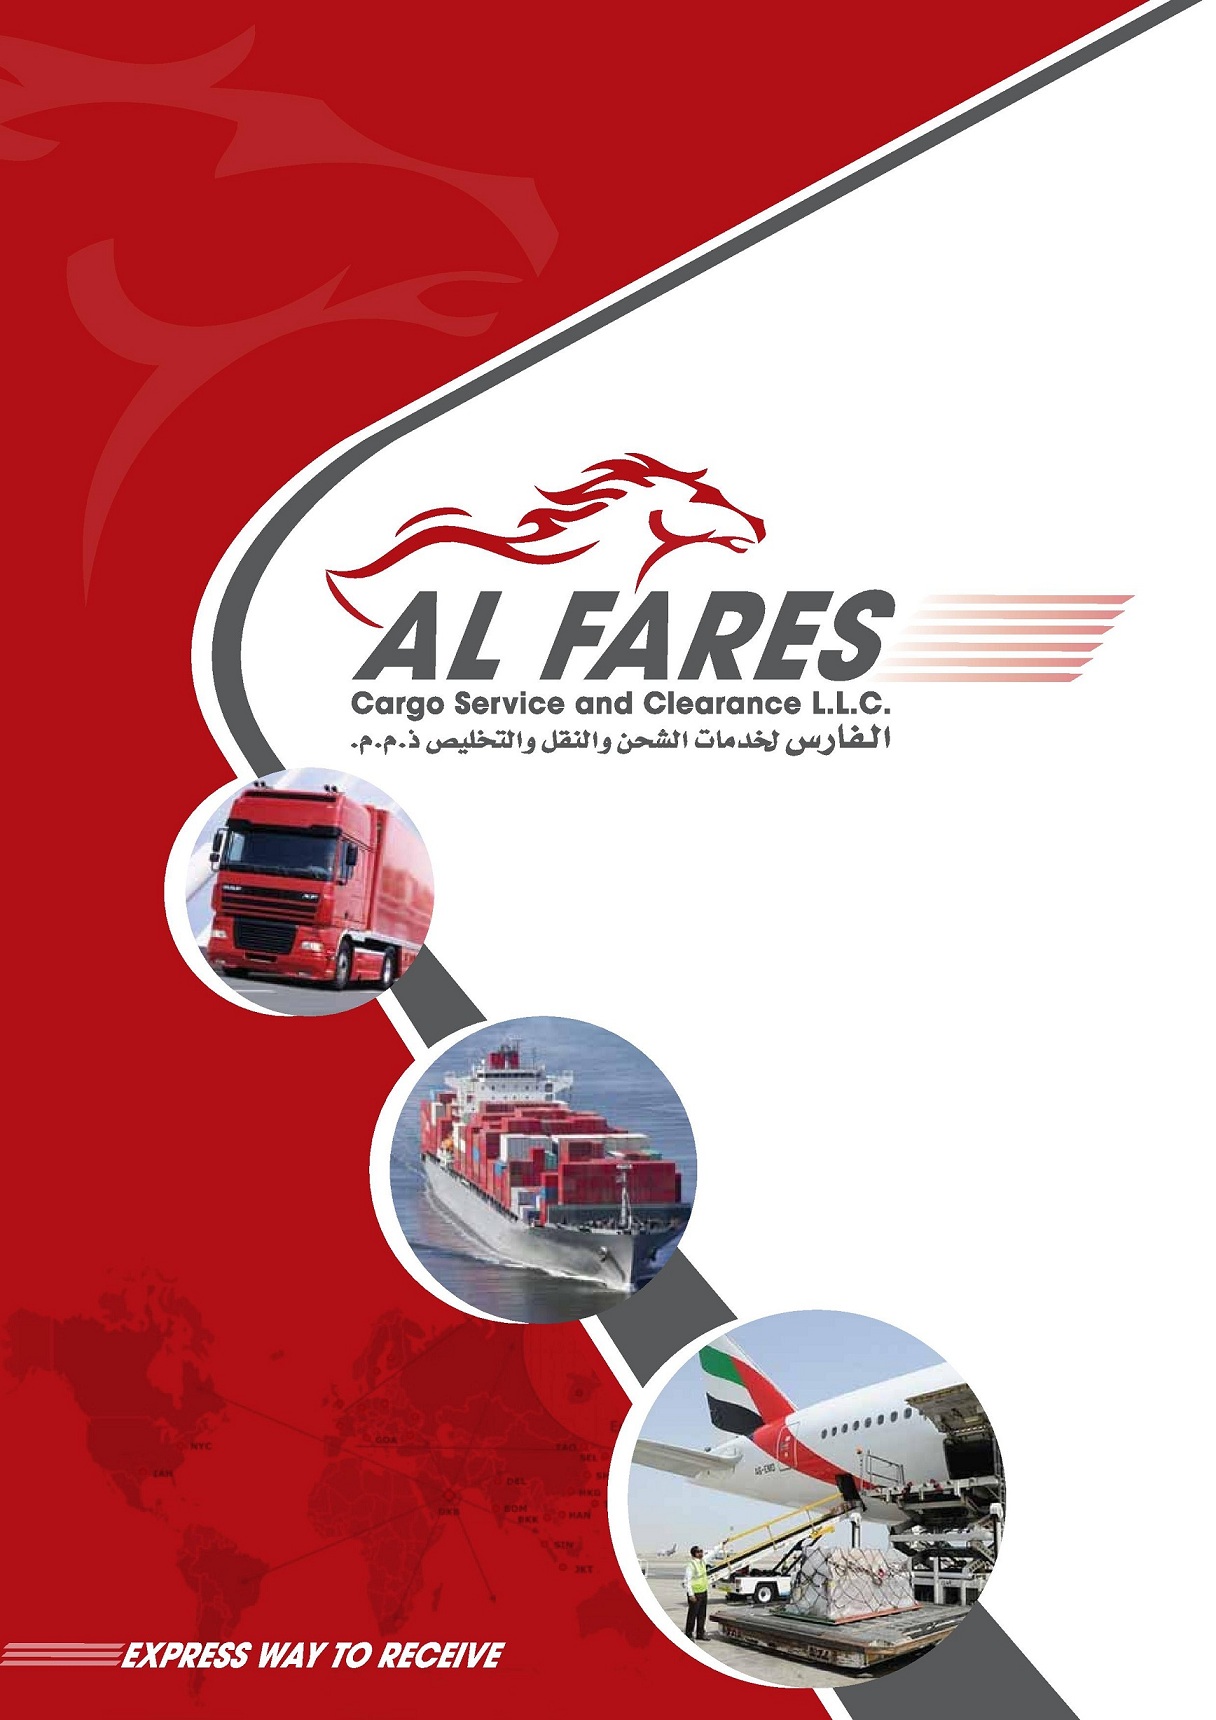  Al Fares Cargo Service & Clearance